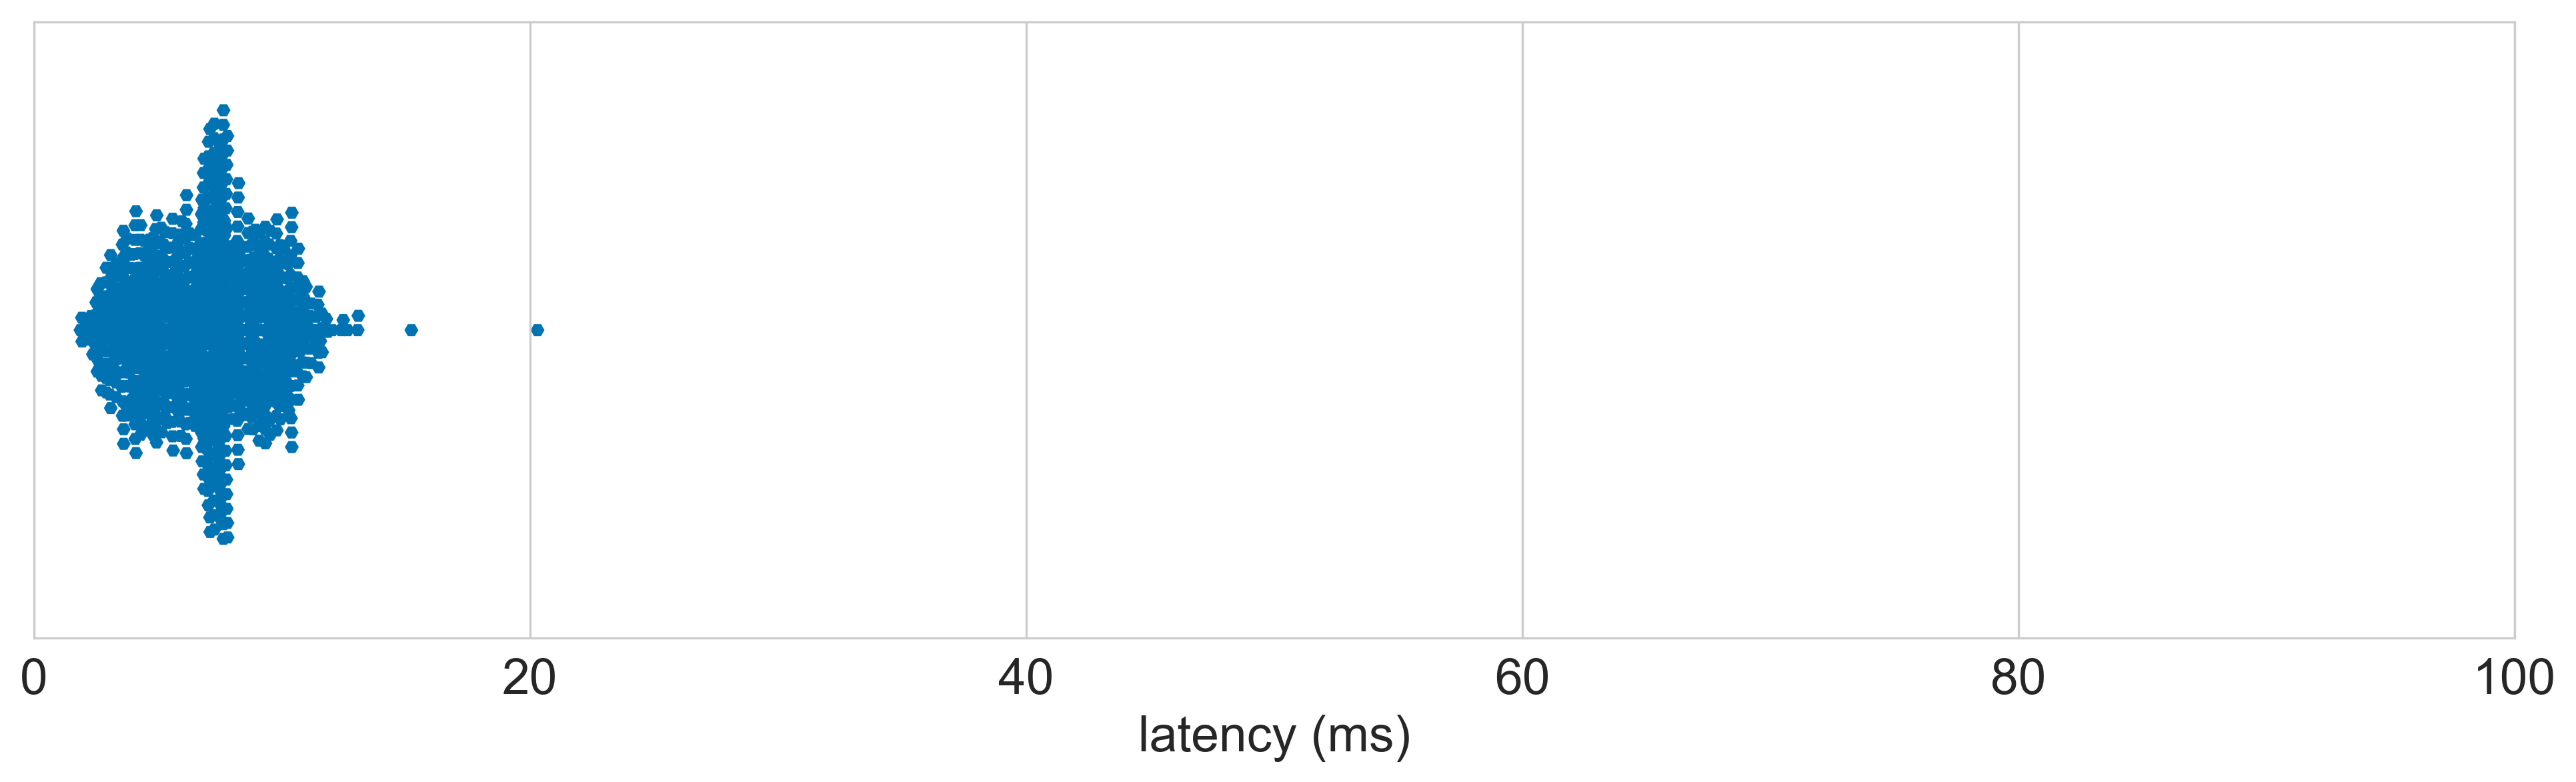 YD60BLE_Custom_Keyboard_PCB latency distribution 